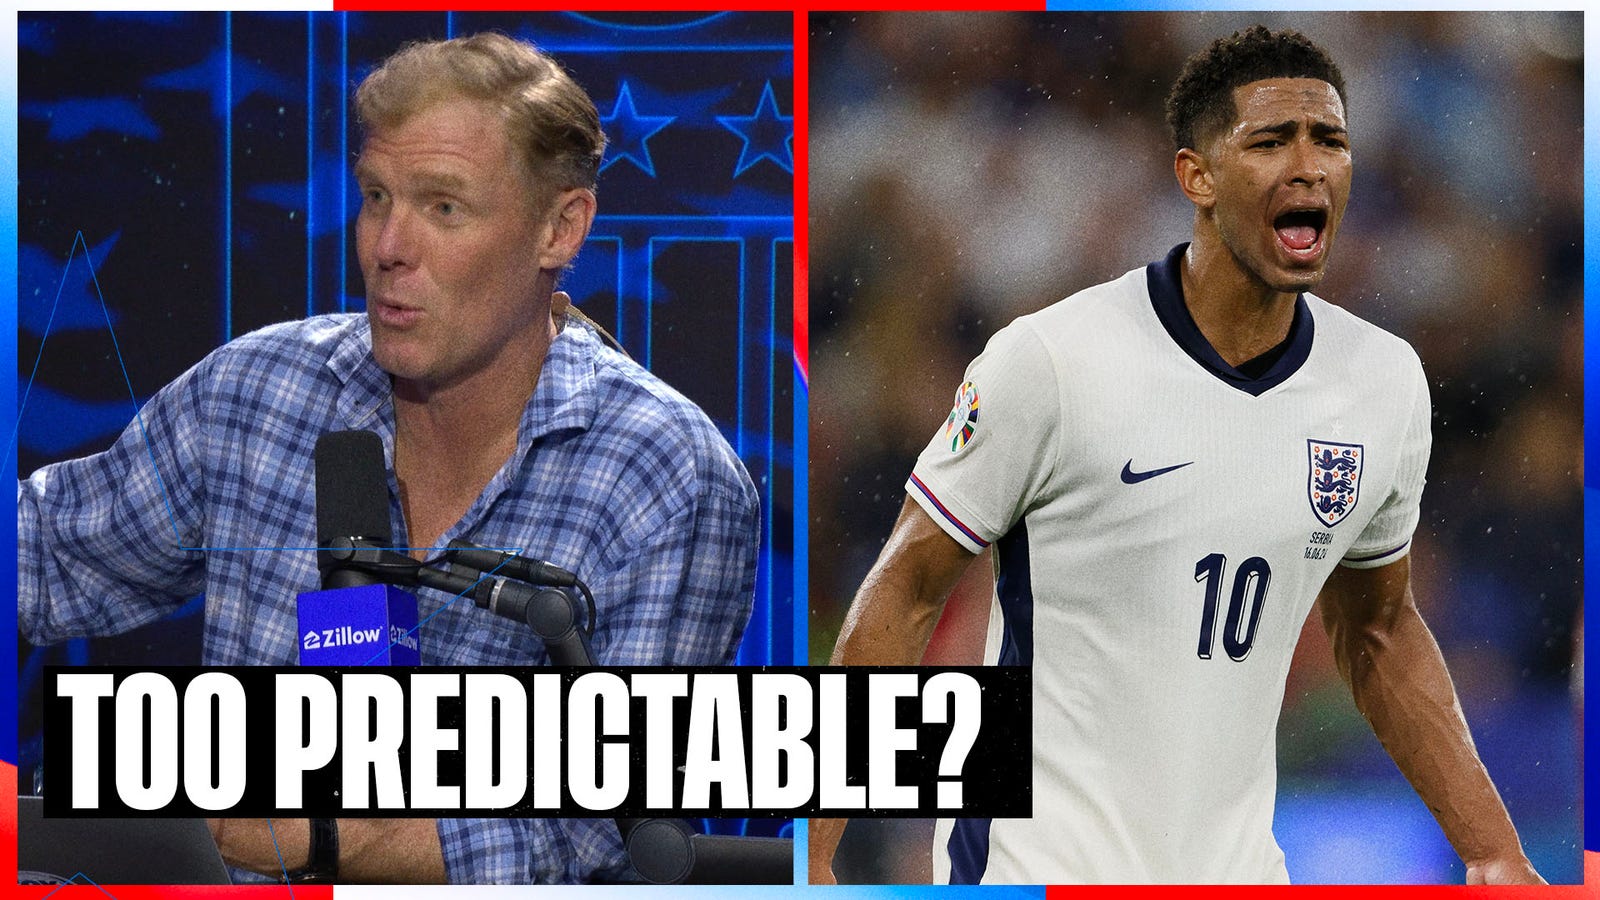 Has England become predictable under Gareth Southgate's tactics?